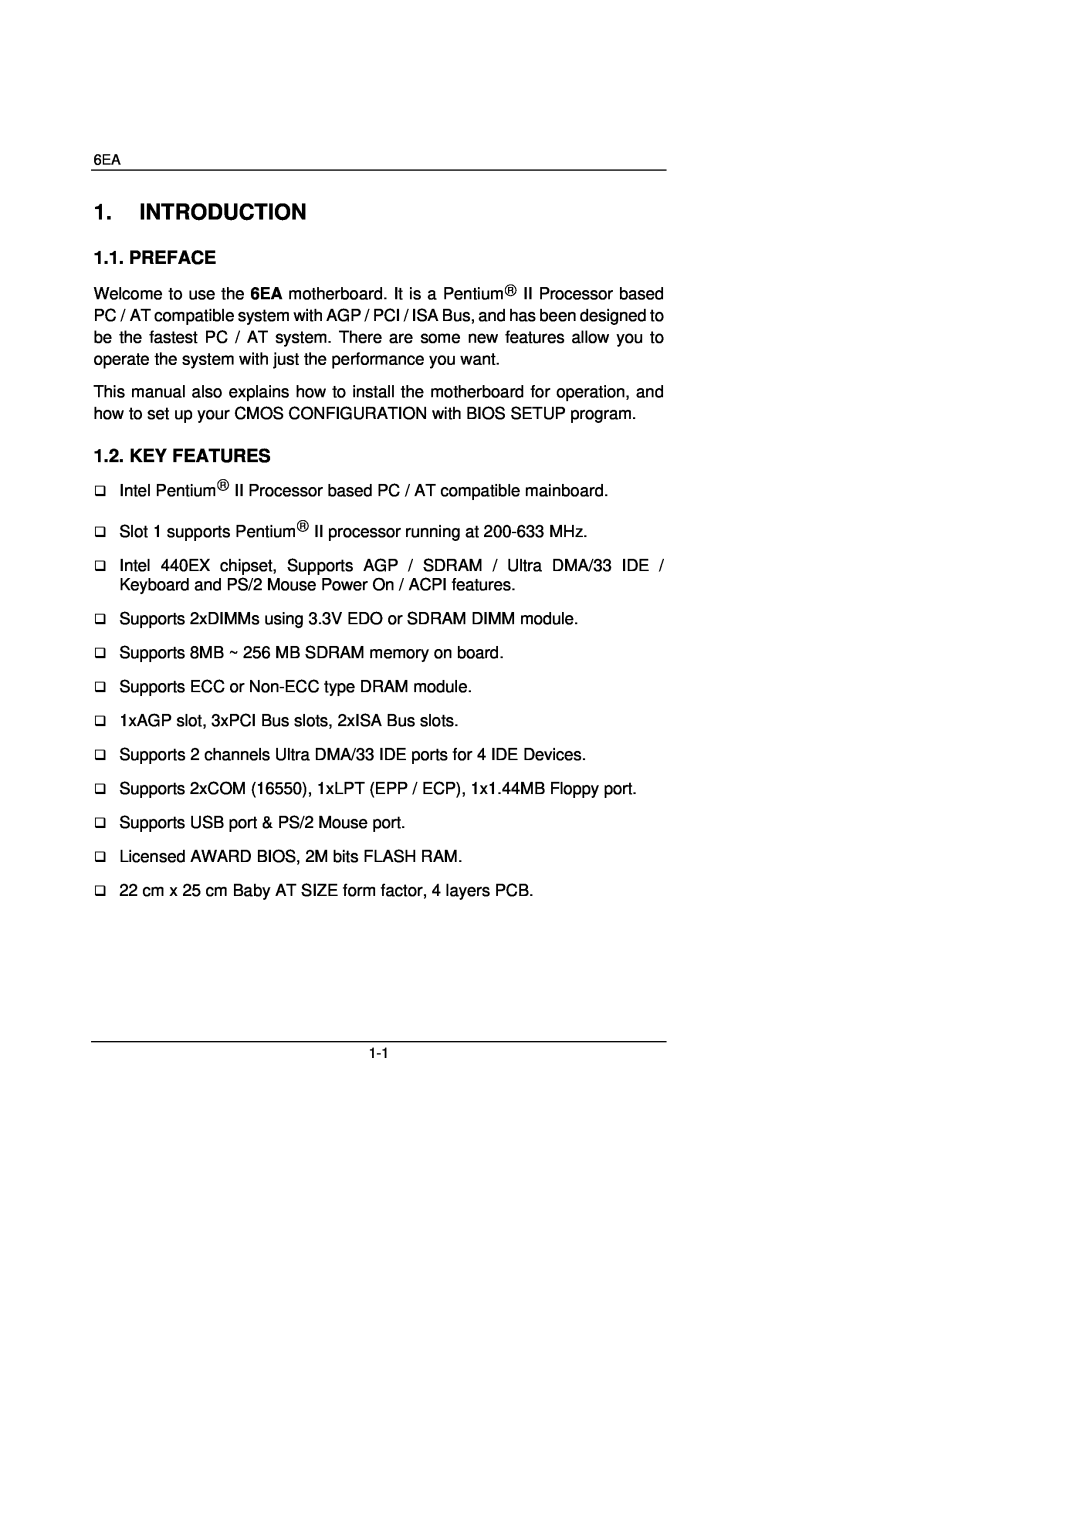 Gigabyte 6EA manual Introduction, Preface, Key Features 